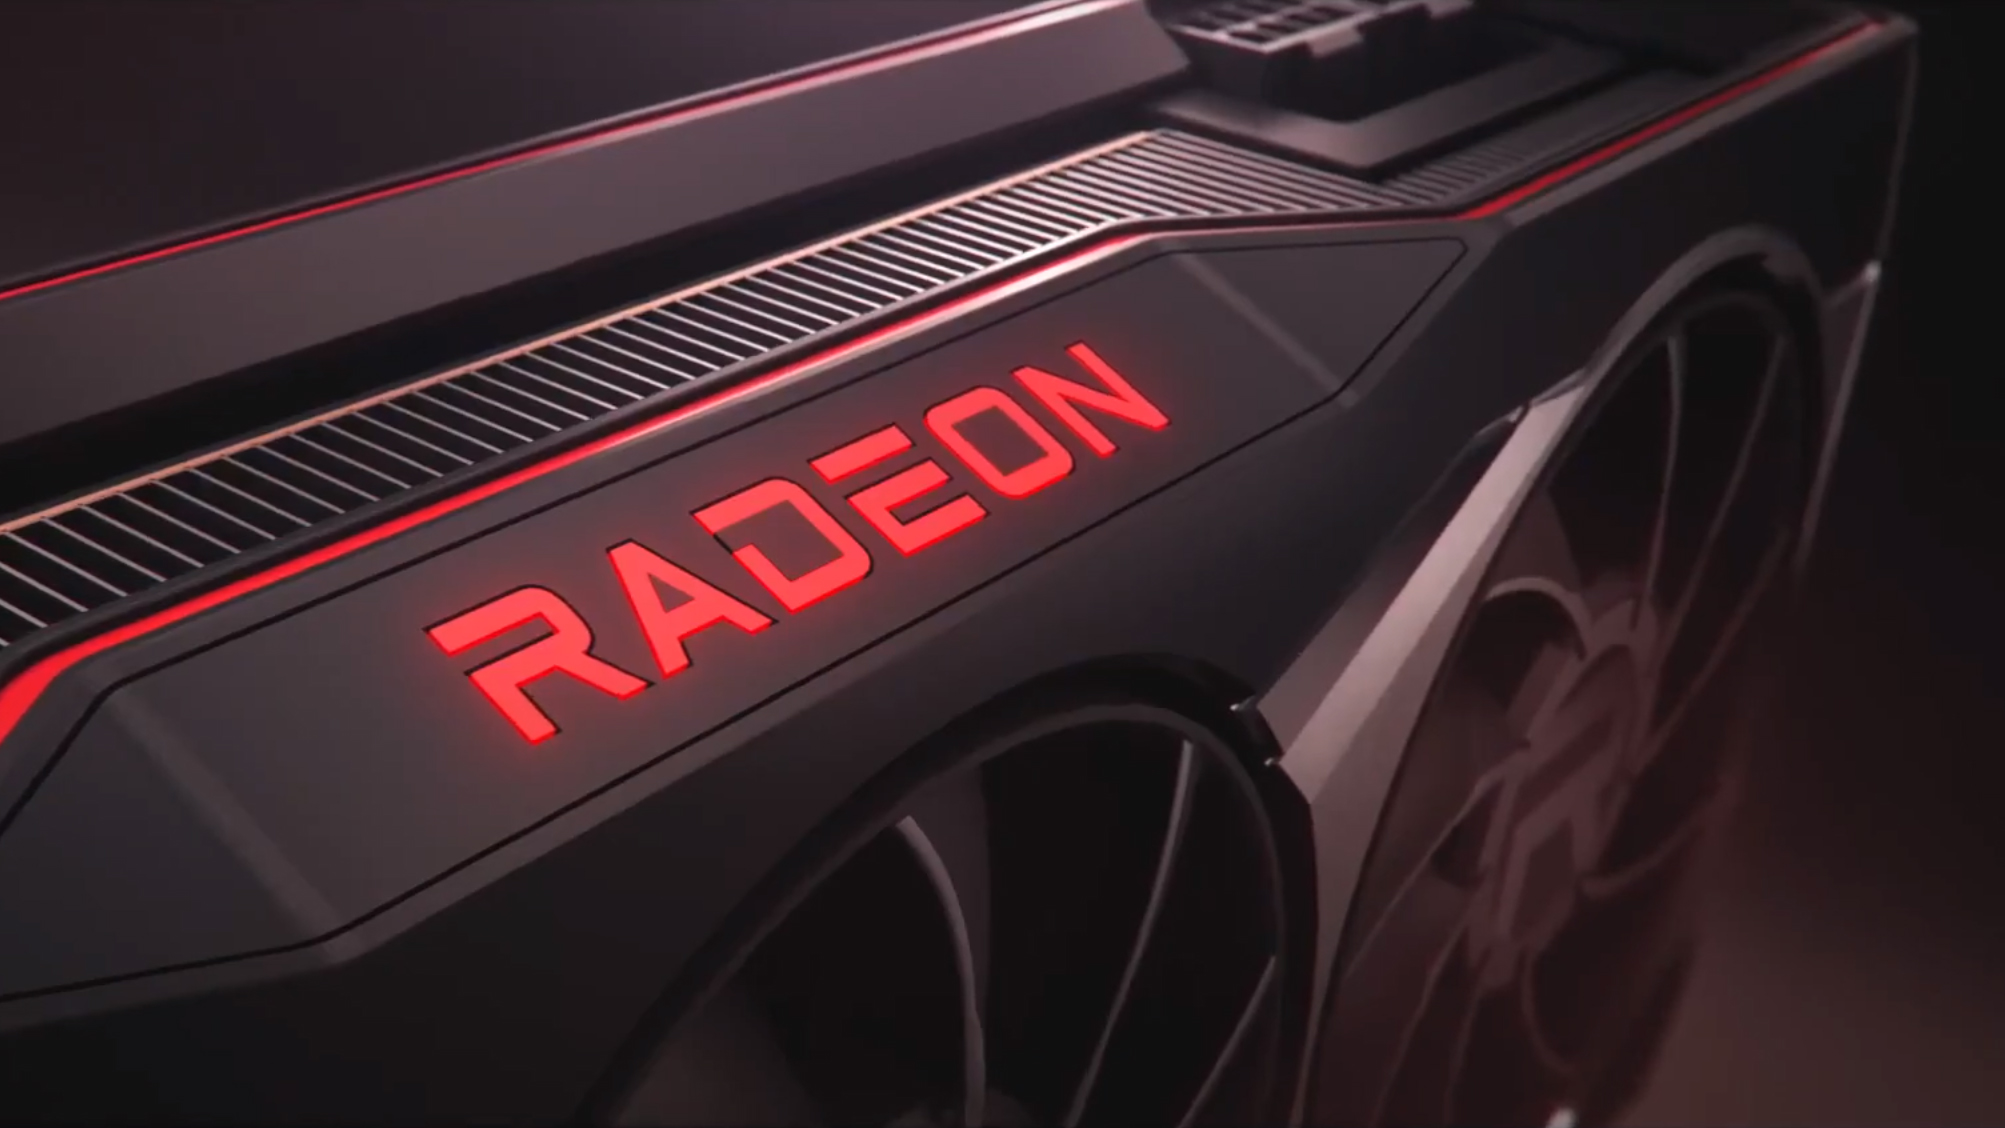 Close-up of Radeon logo on a Big Navi graphics card